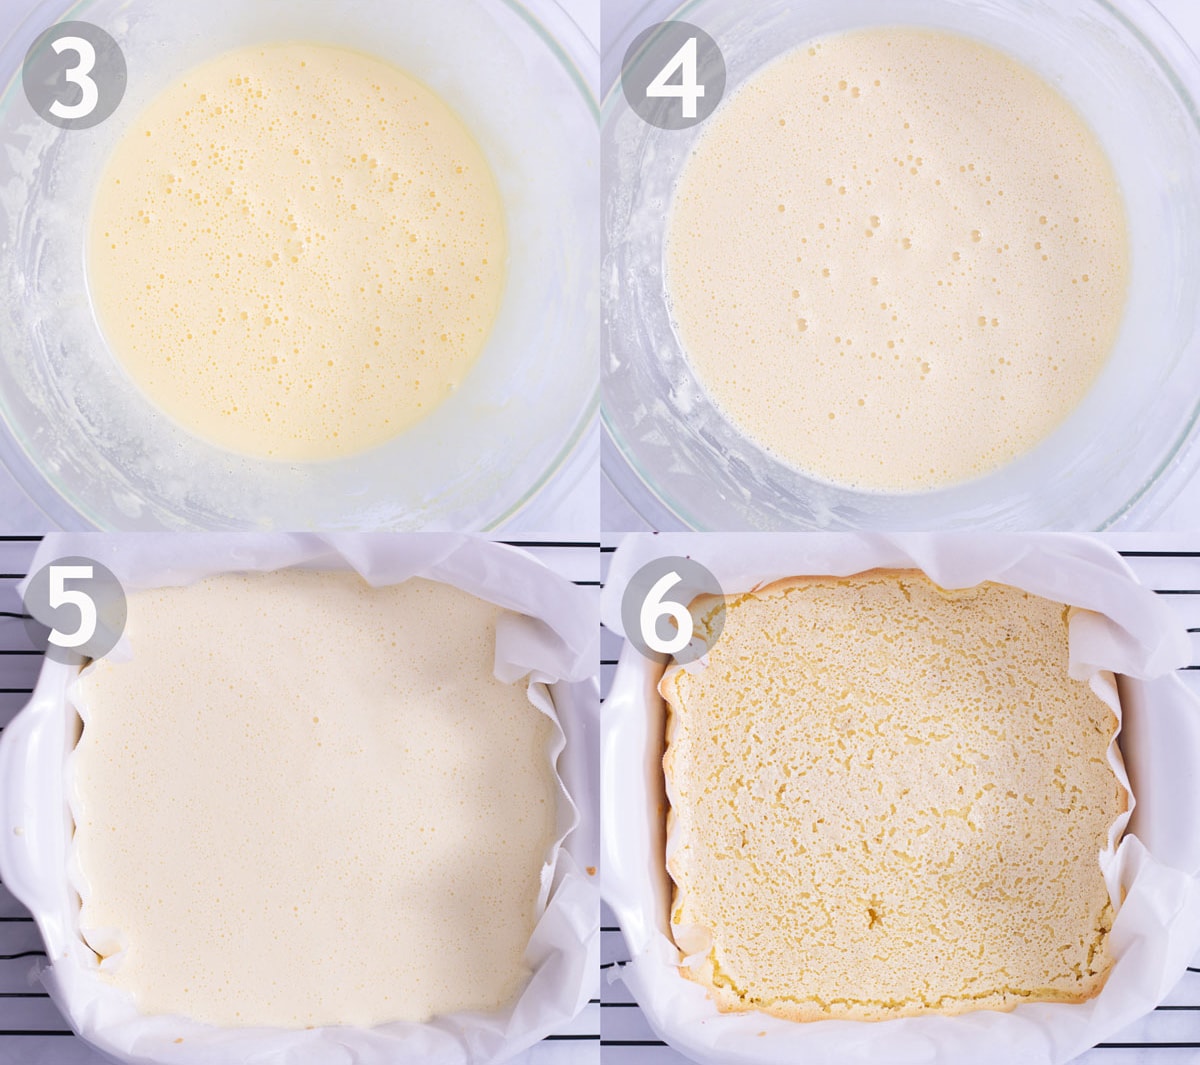 Steps to make lemon bars: mix filling ingredients and bake in crust.